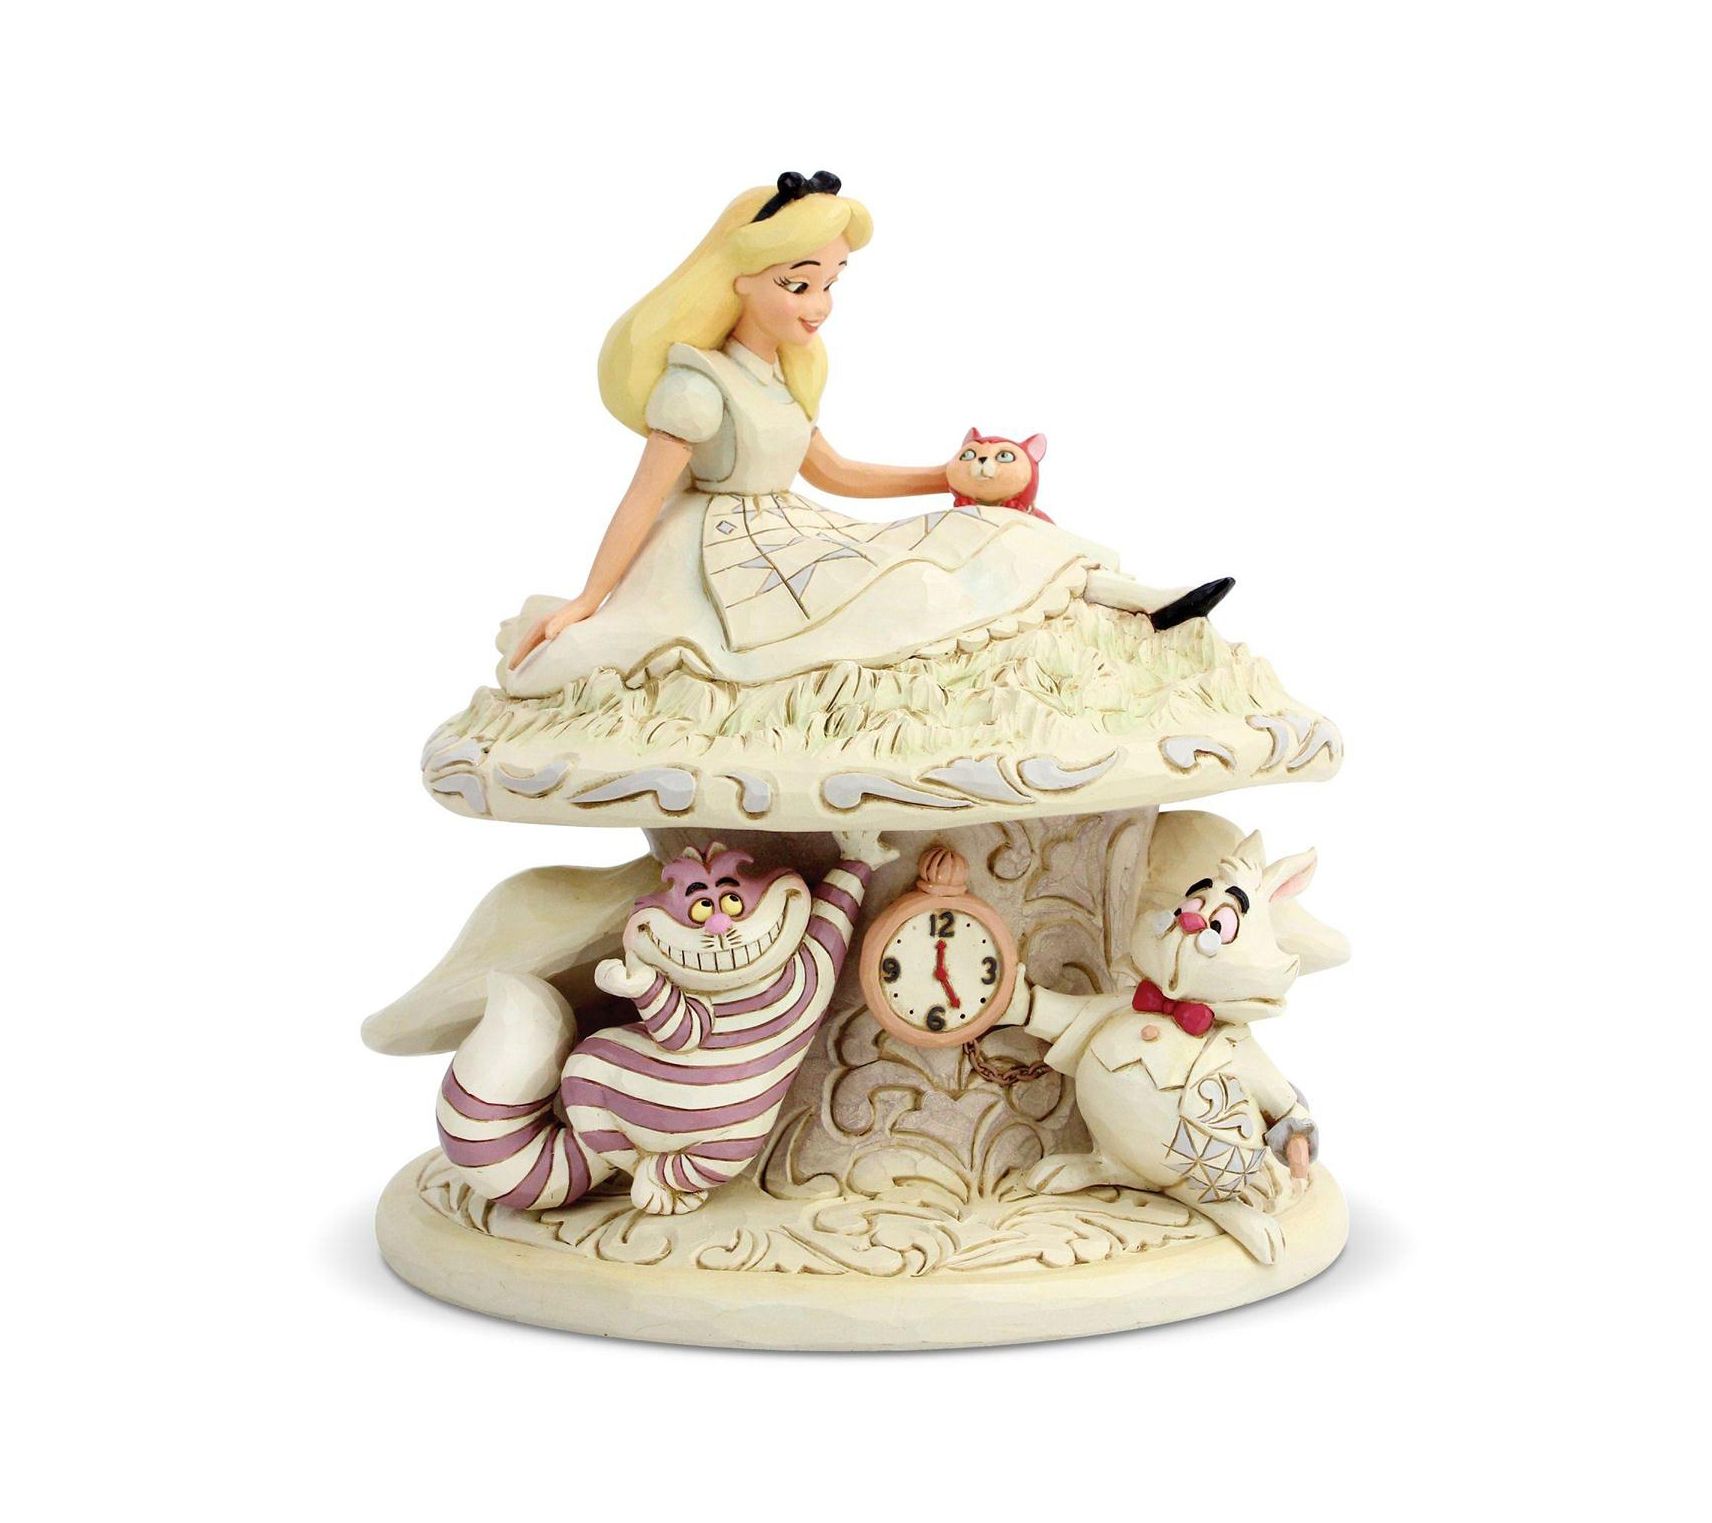 Precious Moments Wishing You A Happy Un-Birthday Alice in Wonderland  Figurine White